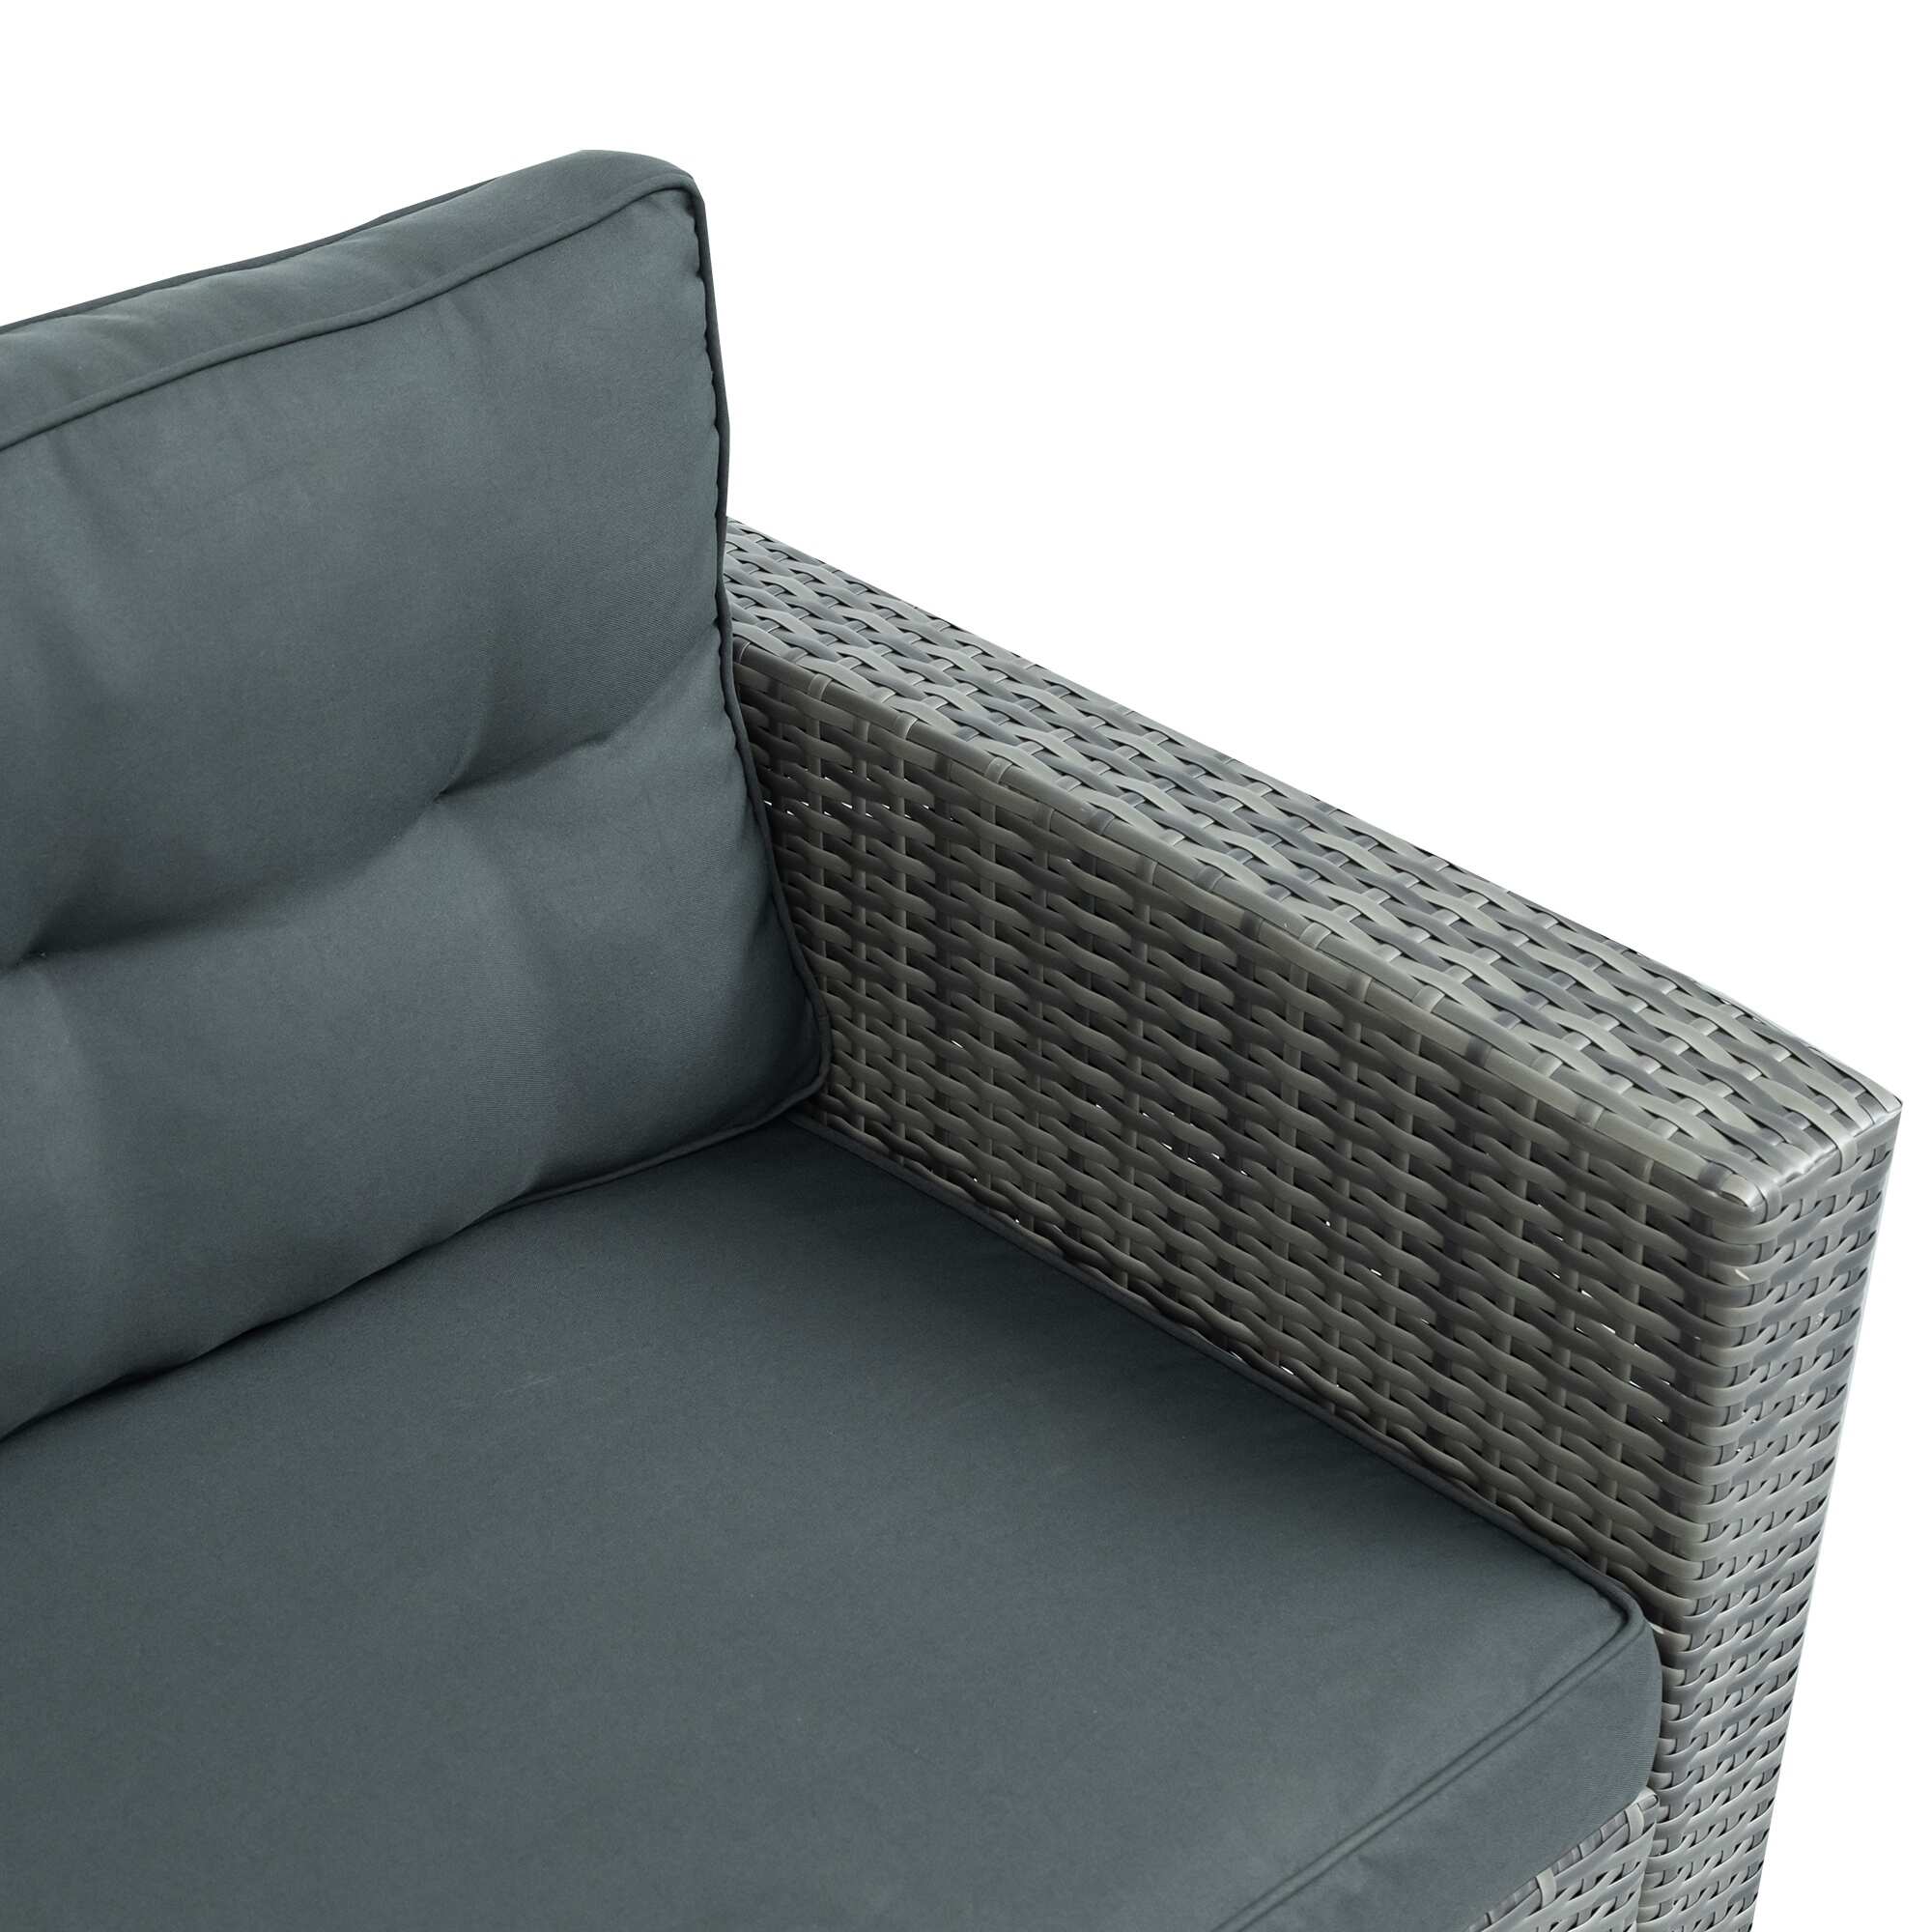 4-Piece Outdoor Furniture Rattan Sofa Set with Storage Box